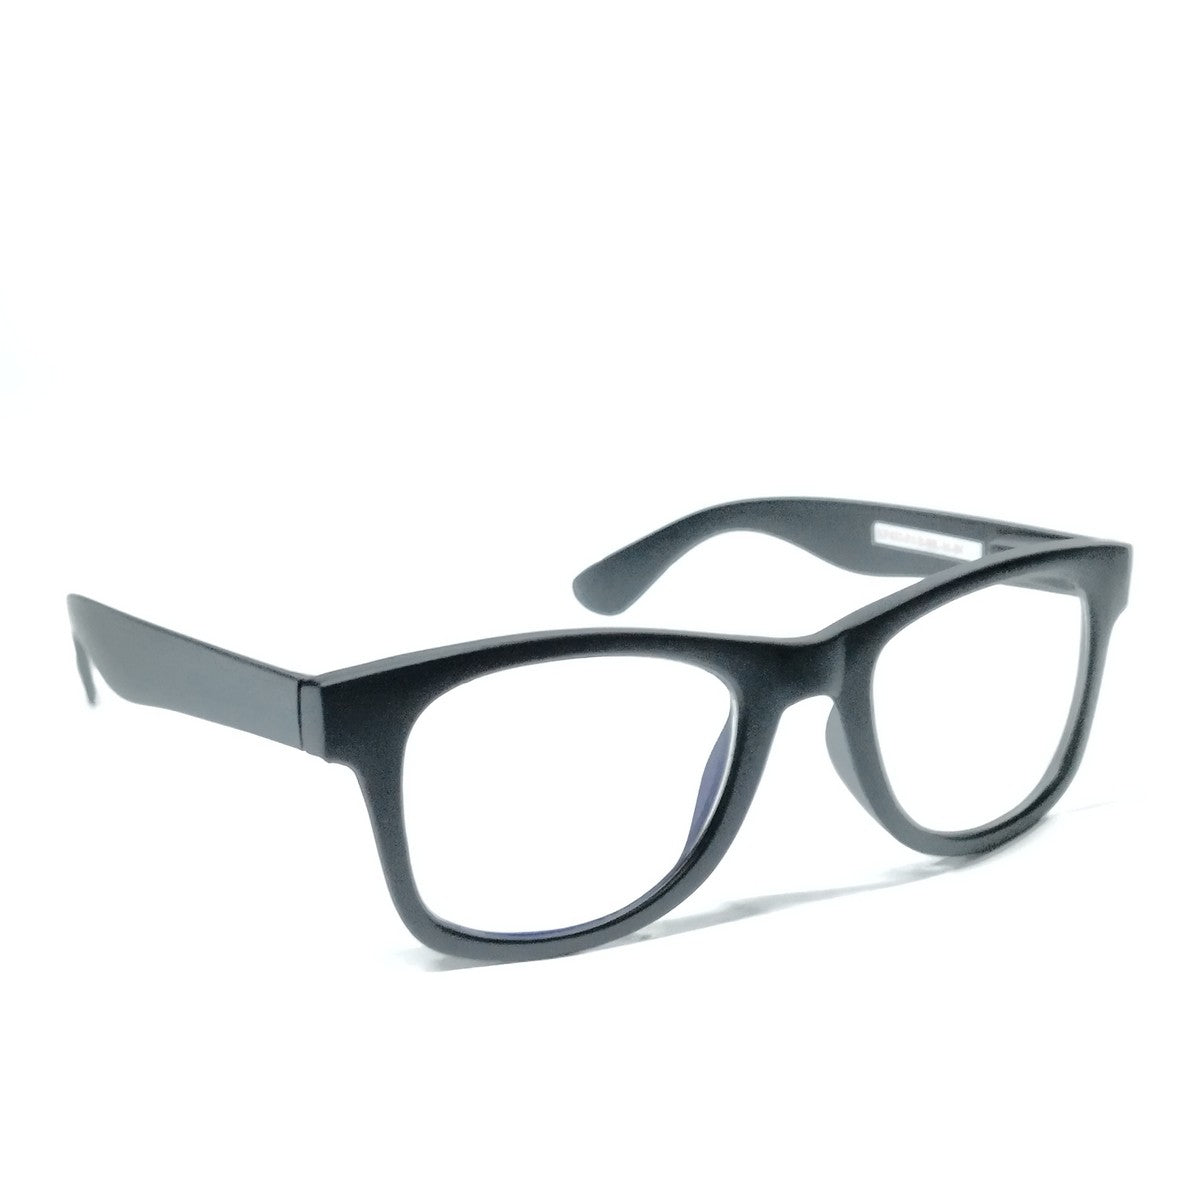 Premium Matt Black Progressive Glassesfor Computers Multifocal Reading Glasses for Men Women